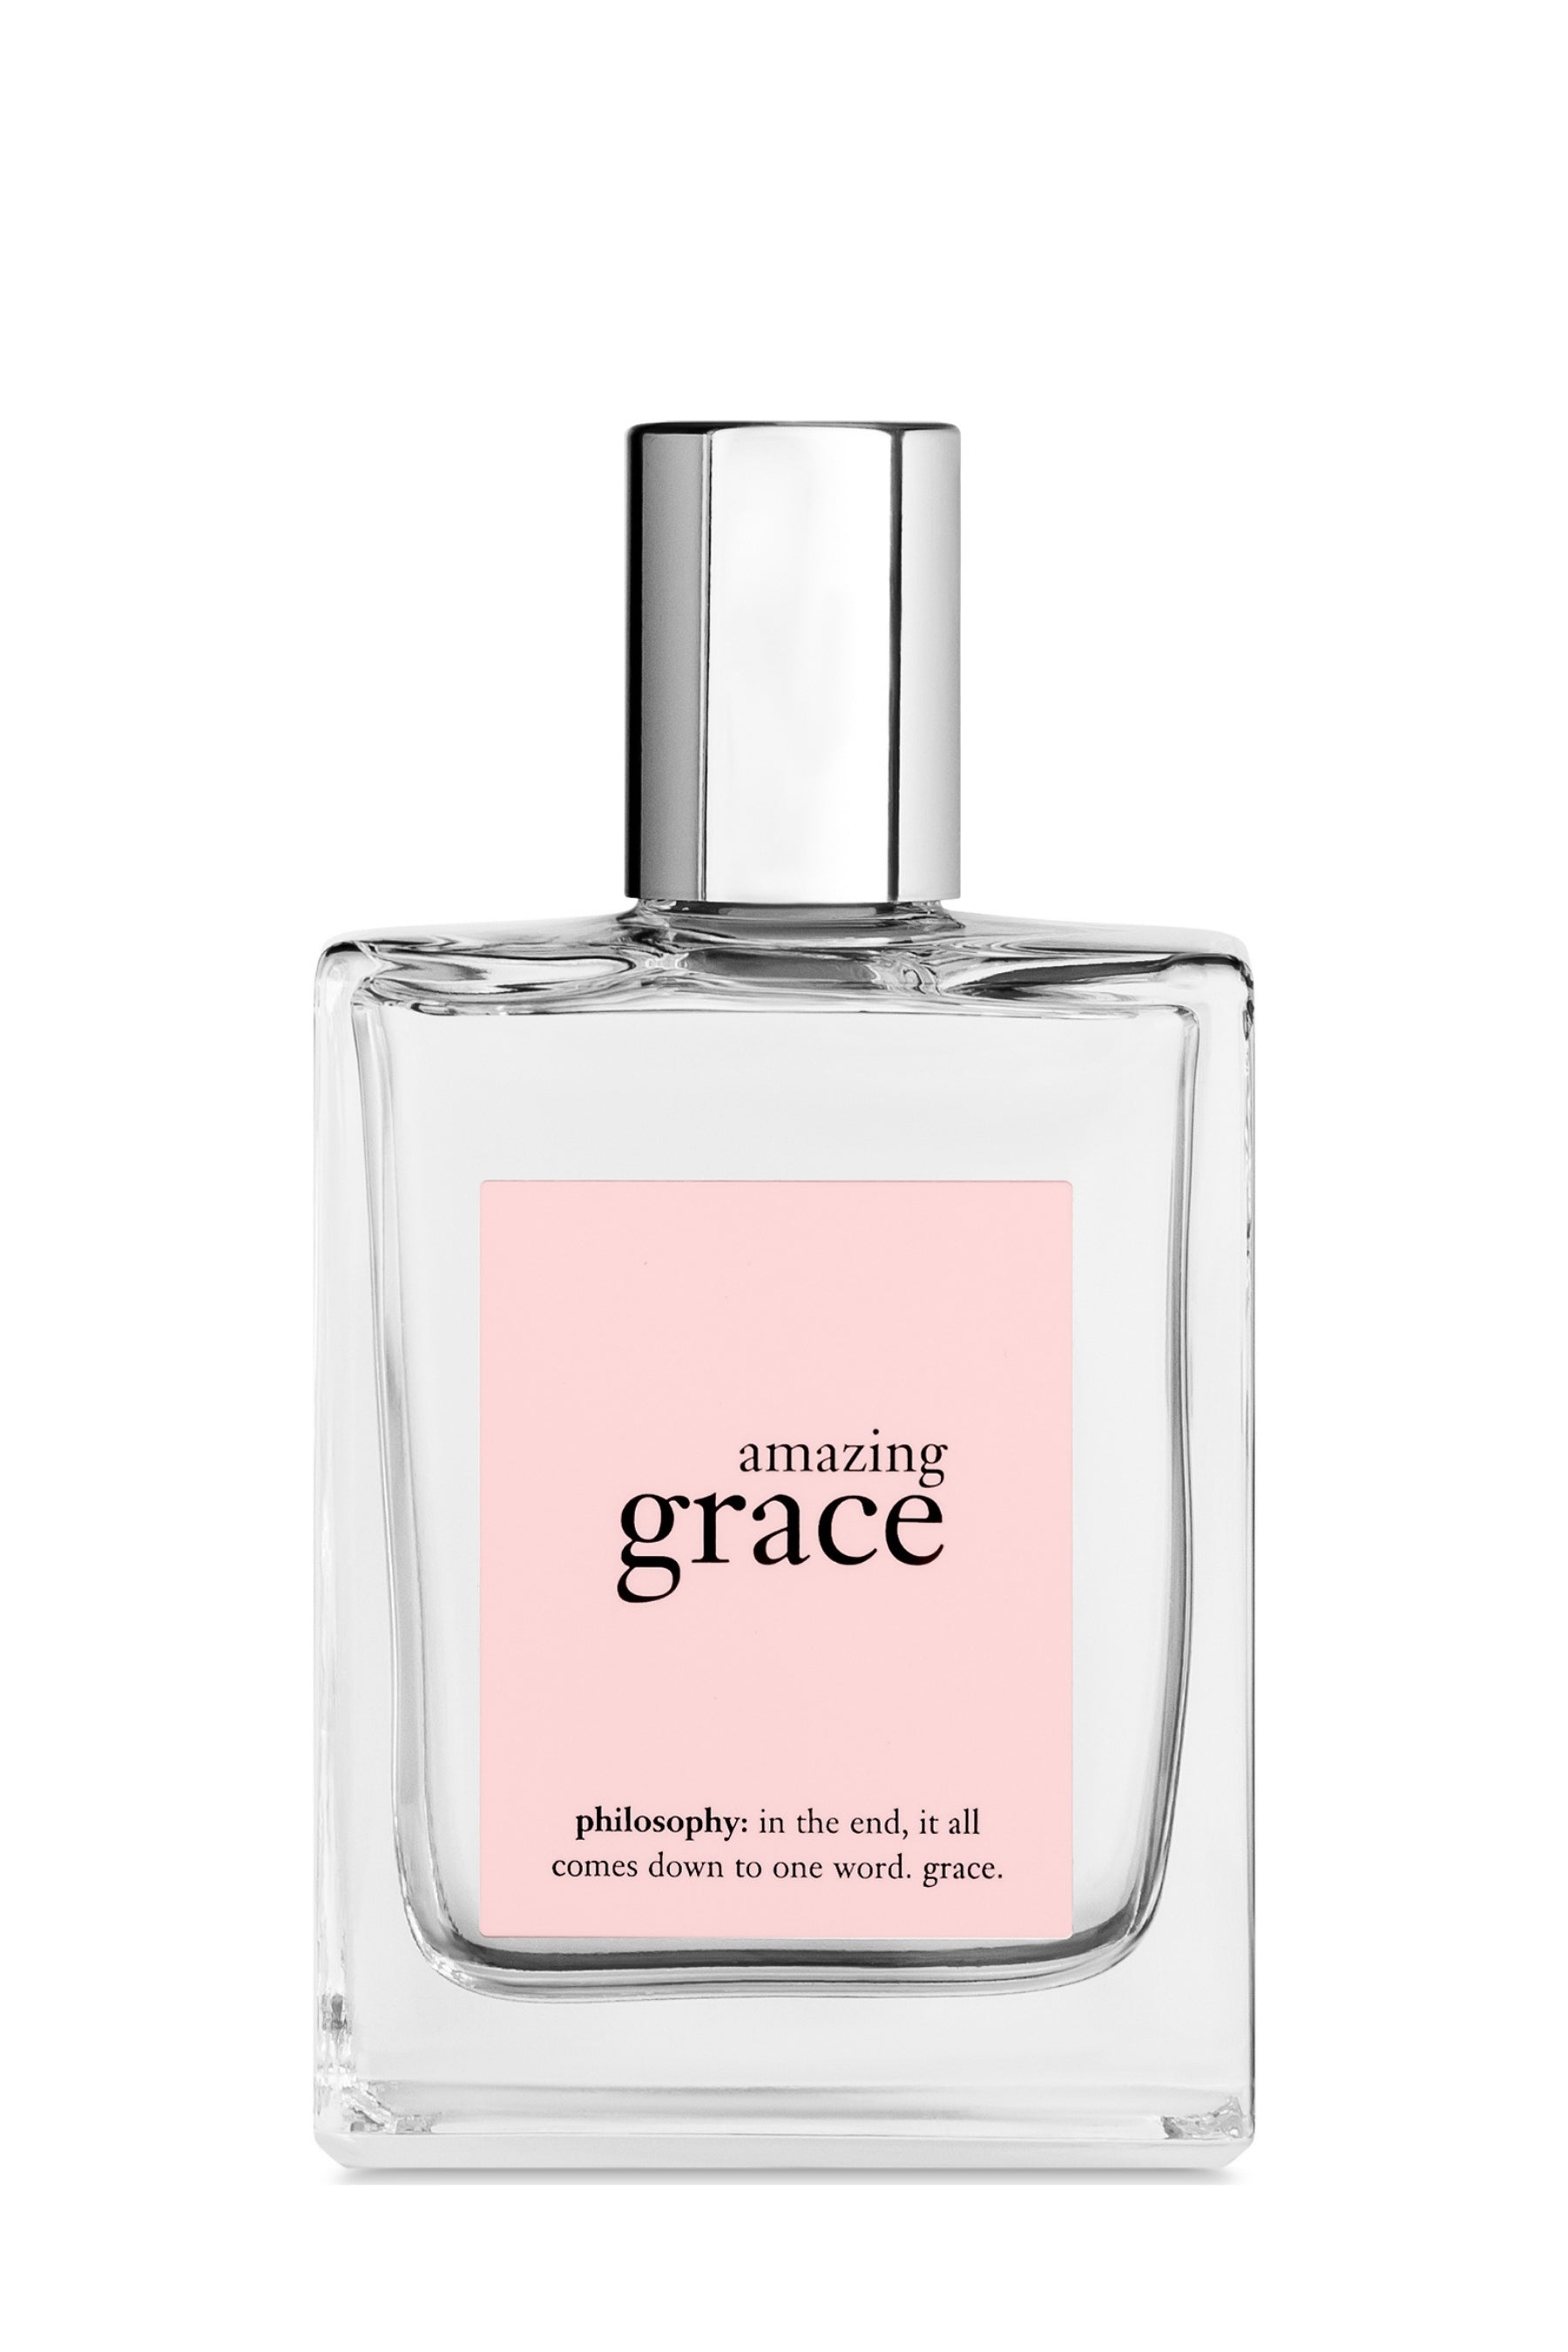 Philosophy Amazing Grace Spray Fragrance - 2 fl oz bottle